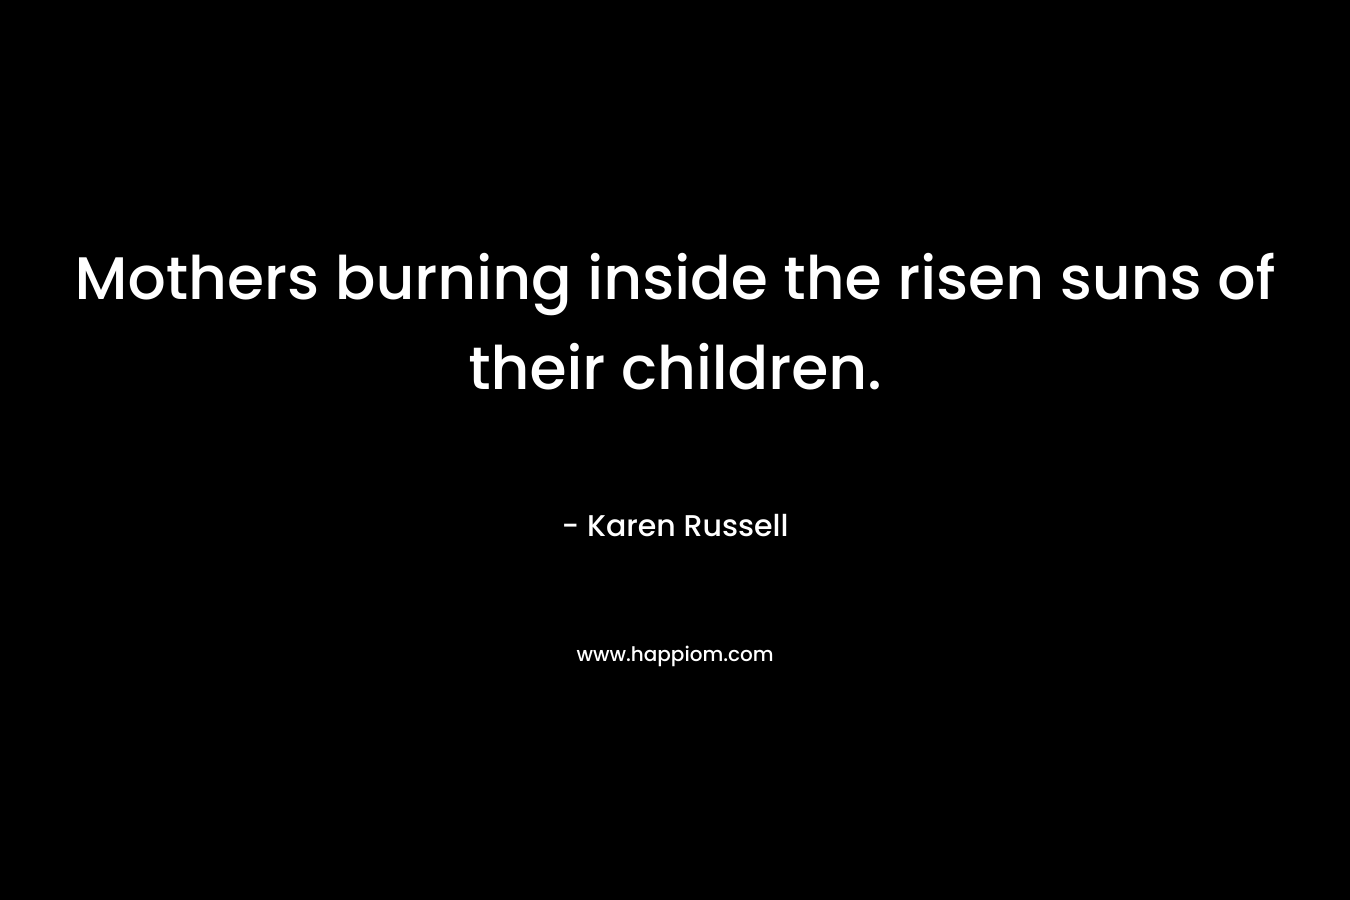 Mothers burning inside the risen suns of their children.